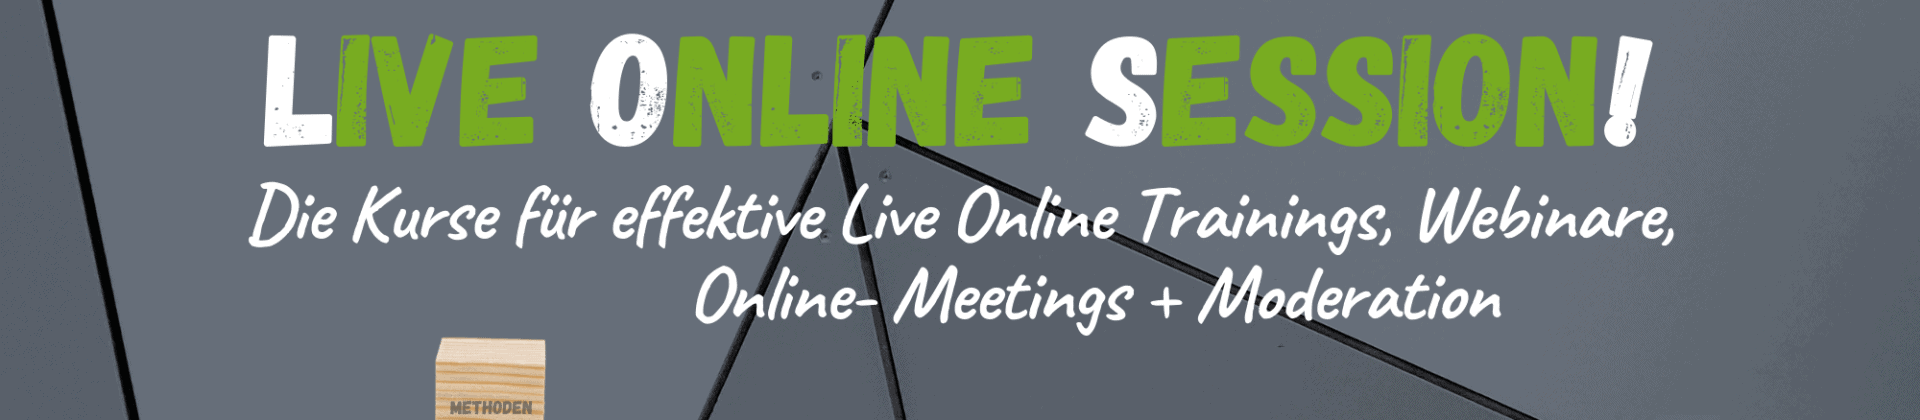 Live Online Session - LOS! ></noscript>Baustein 1